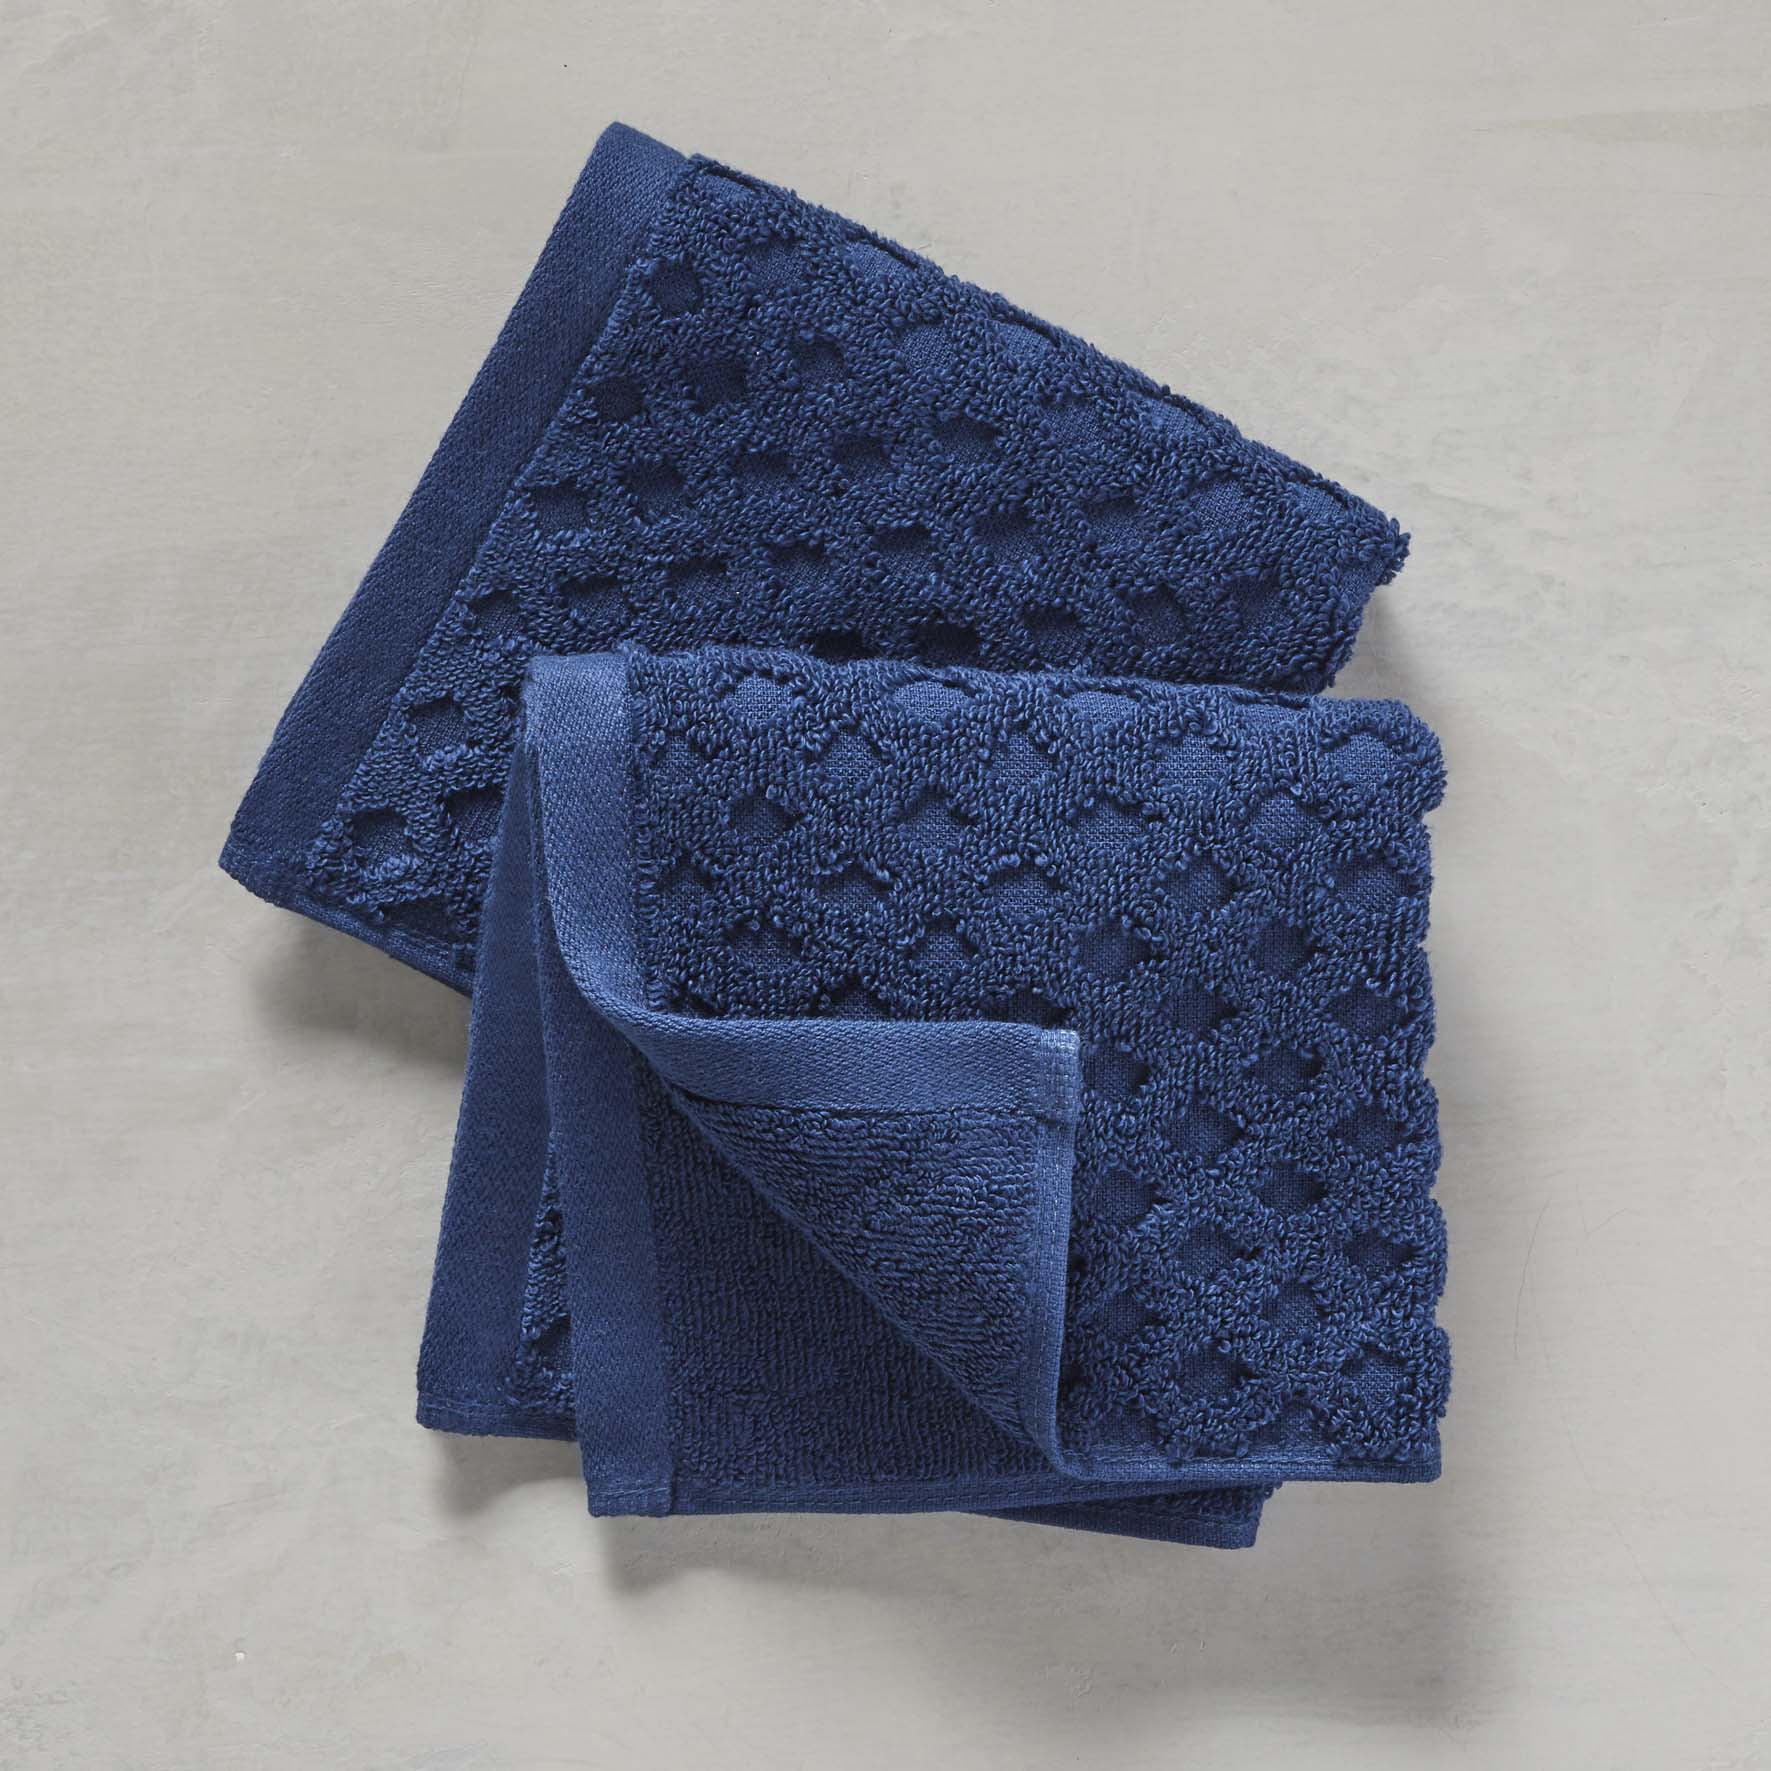 Purely Indulgent 100% Hygrocotton 6-Piece Towel Set, 2-Bath, 2-Hand, 2-WASH (Color: Oil Blue)